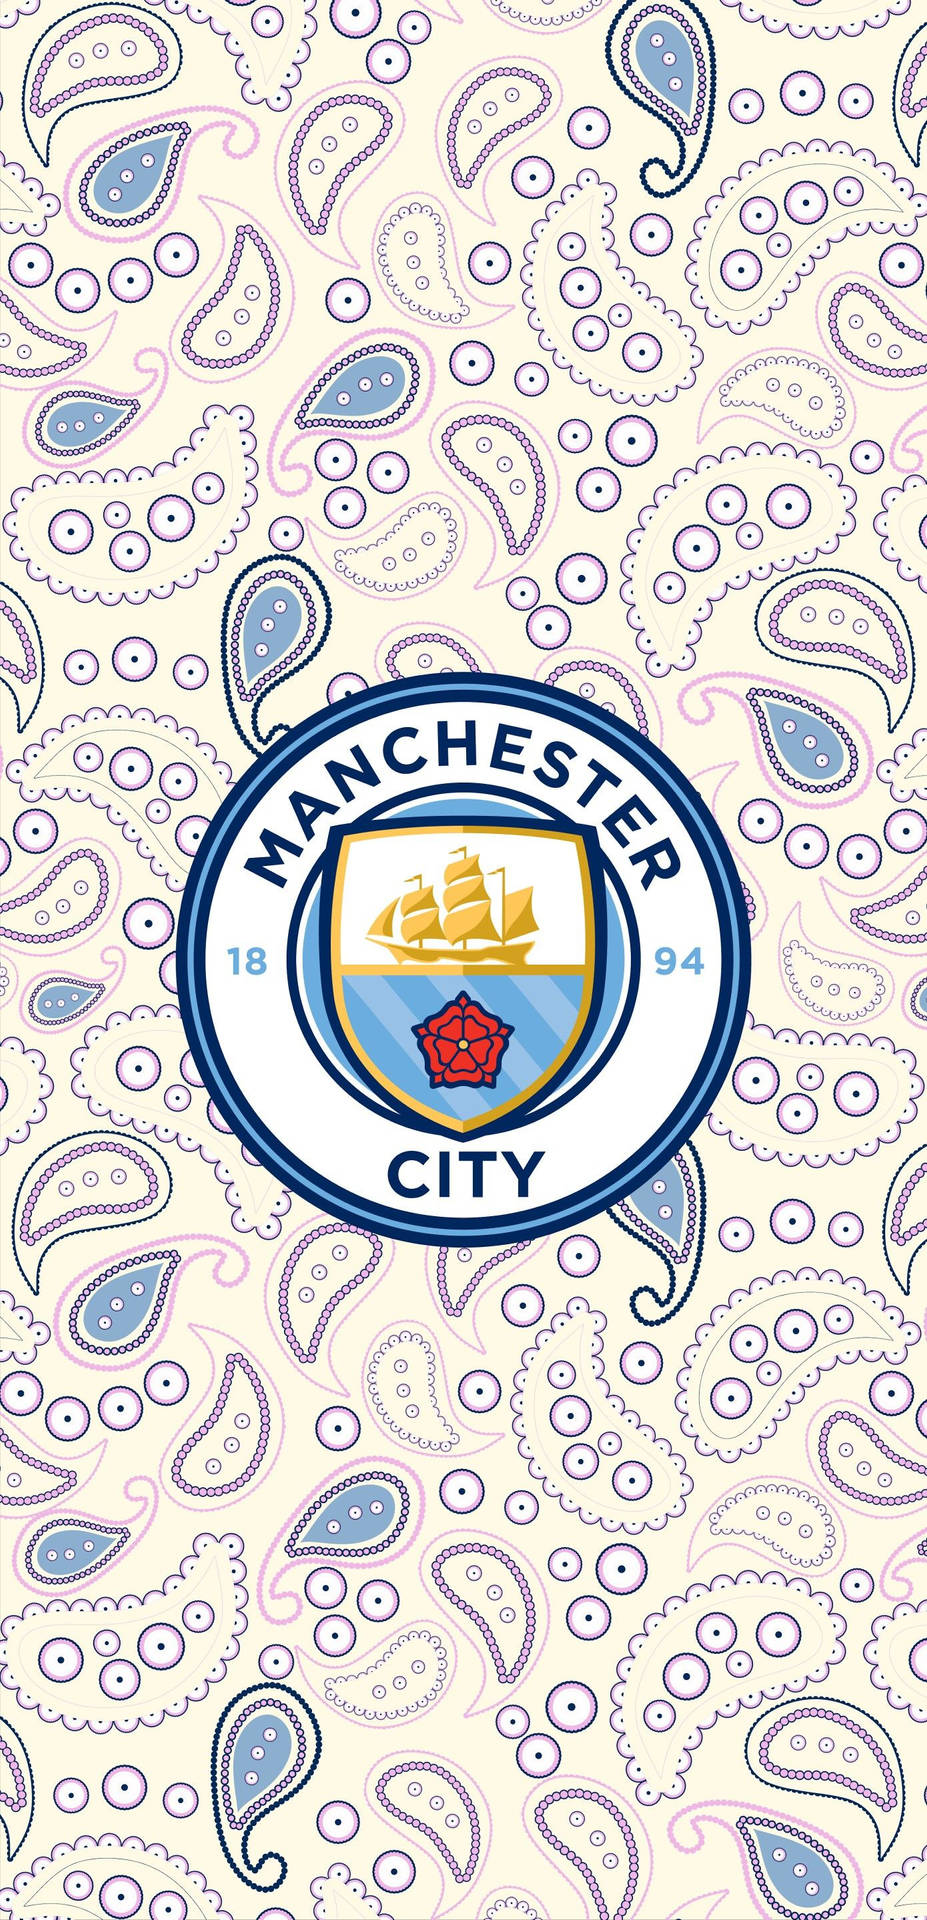 Manchester City Logo on vibrant Paisley background Wallpaper